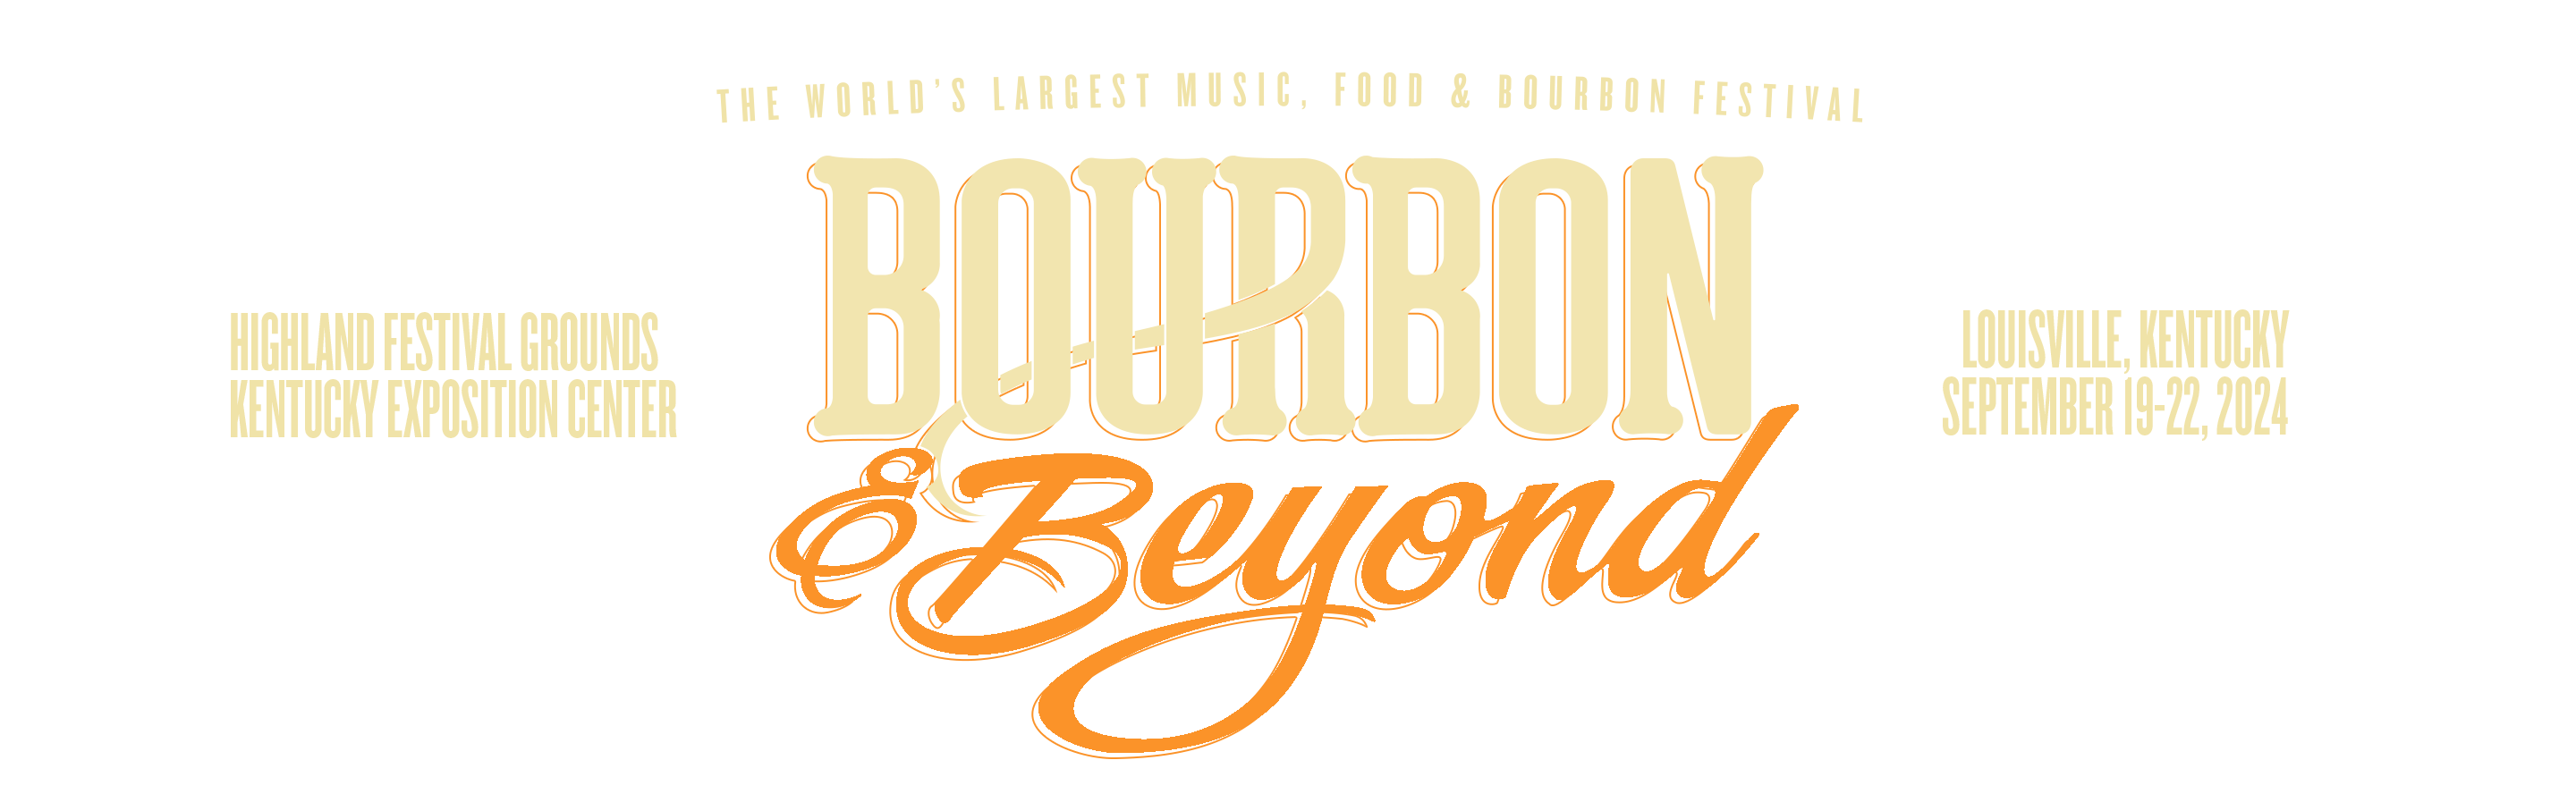 Passes - Bourbon & Beyond